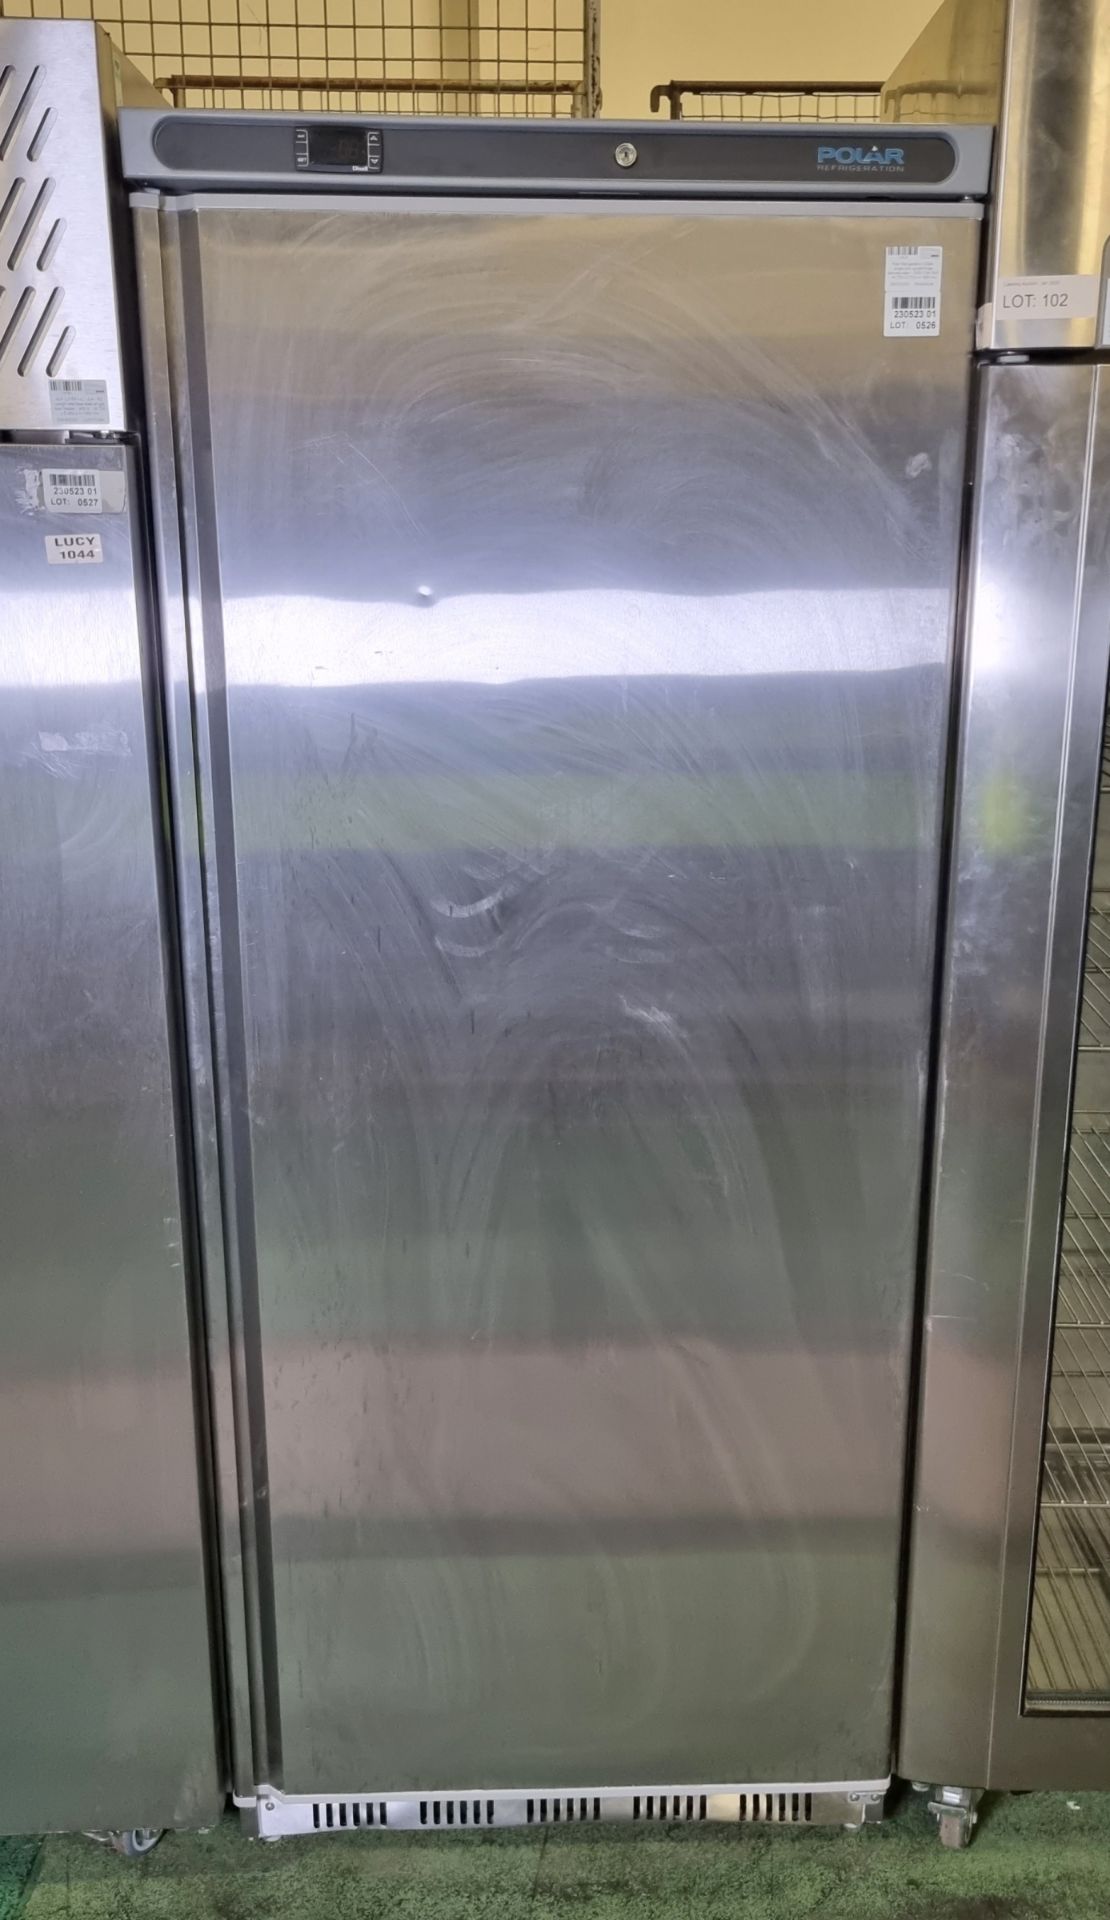 Polar Refrigeration CD084 - single door upright fridge stainless steel - 130W 0.9A 230V - W 770